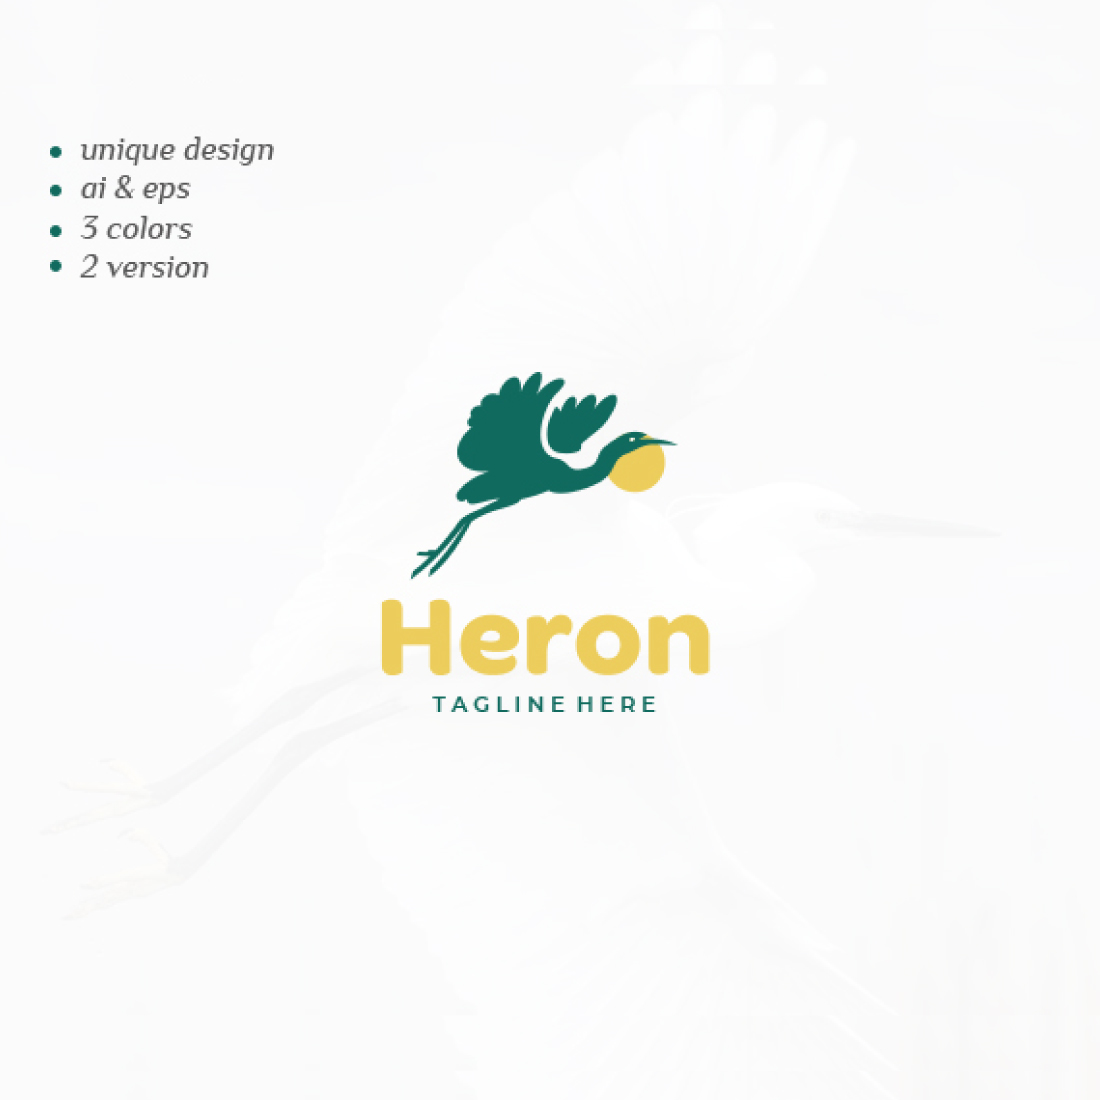 Heron Logo cover image.